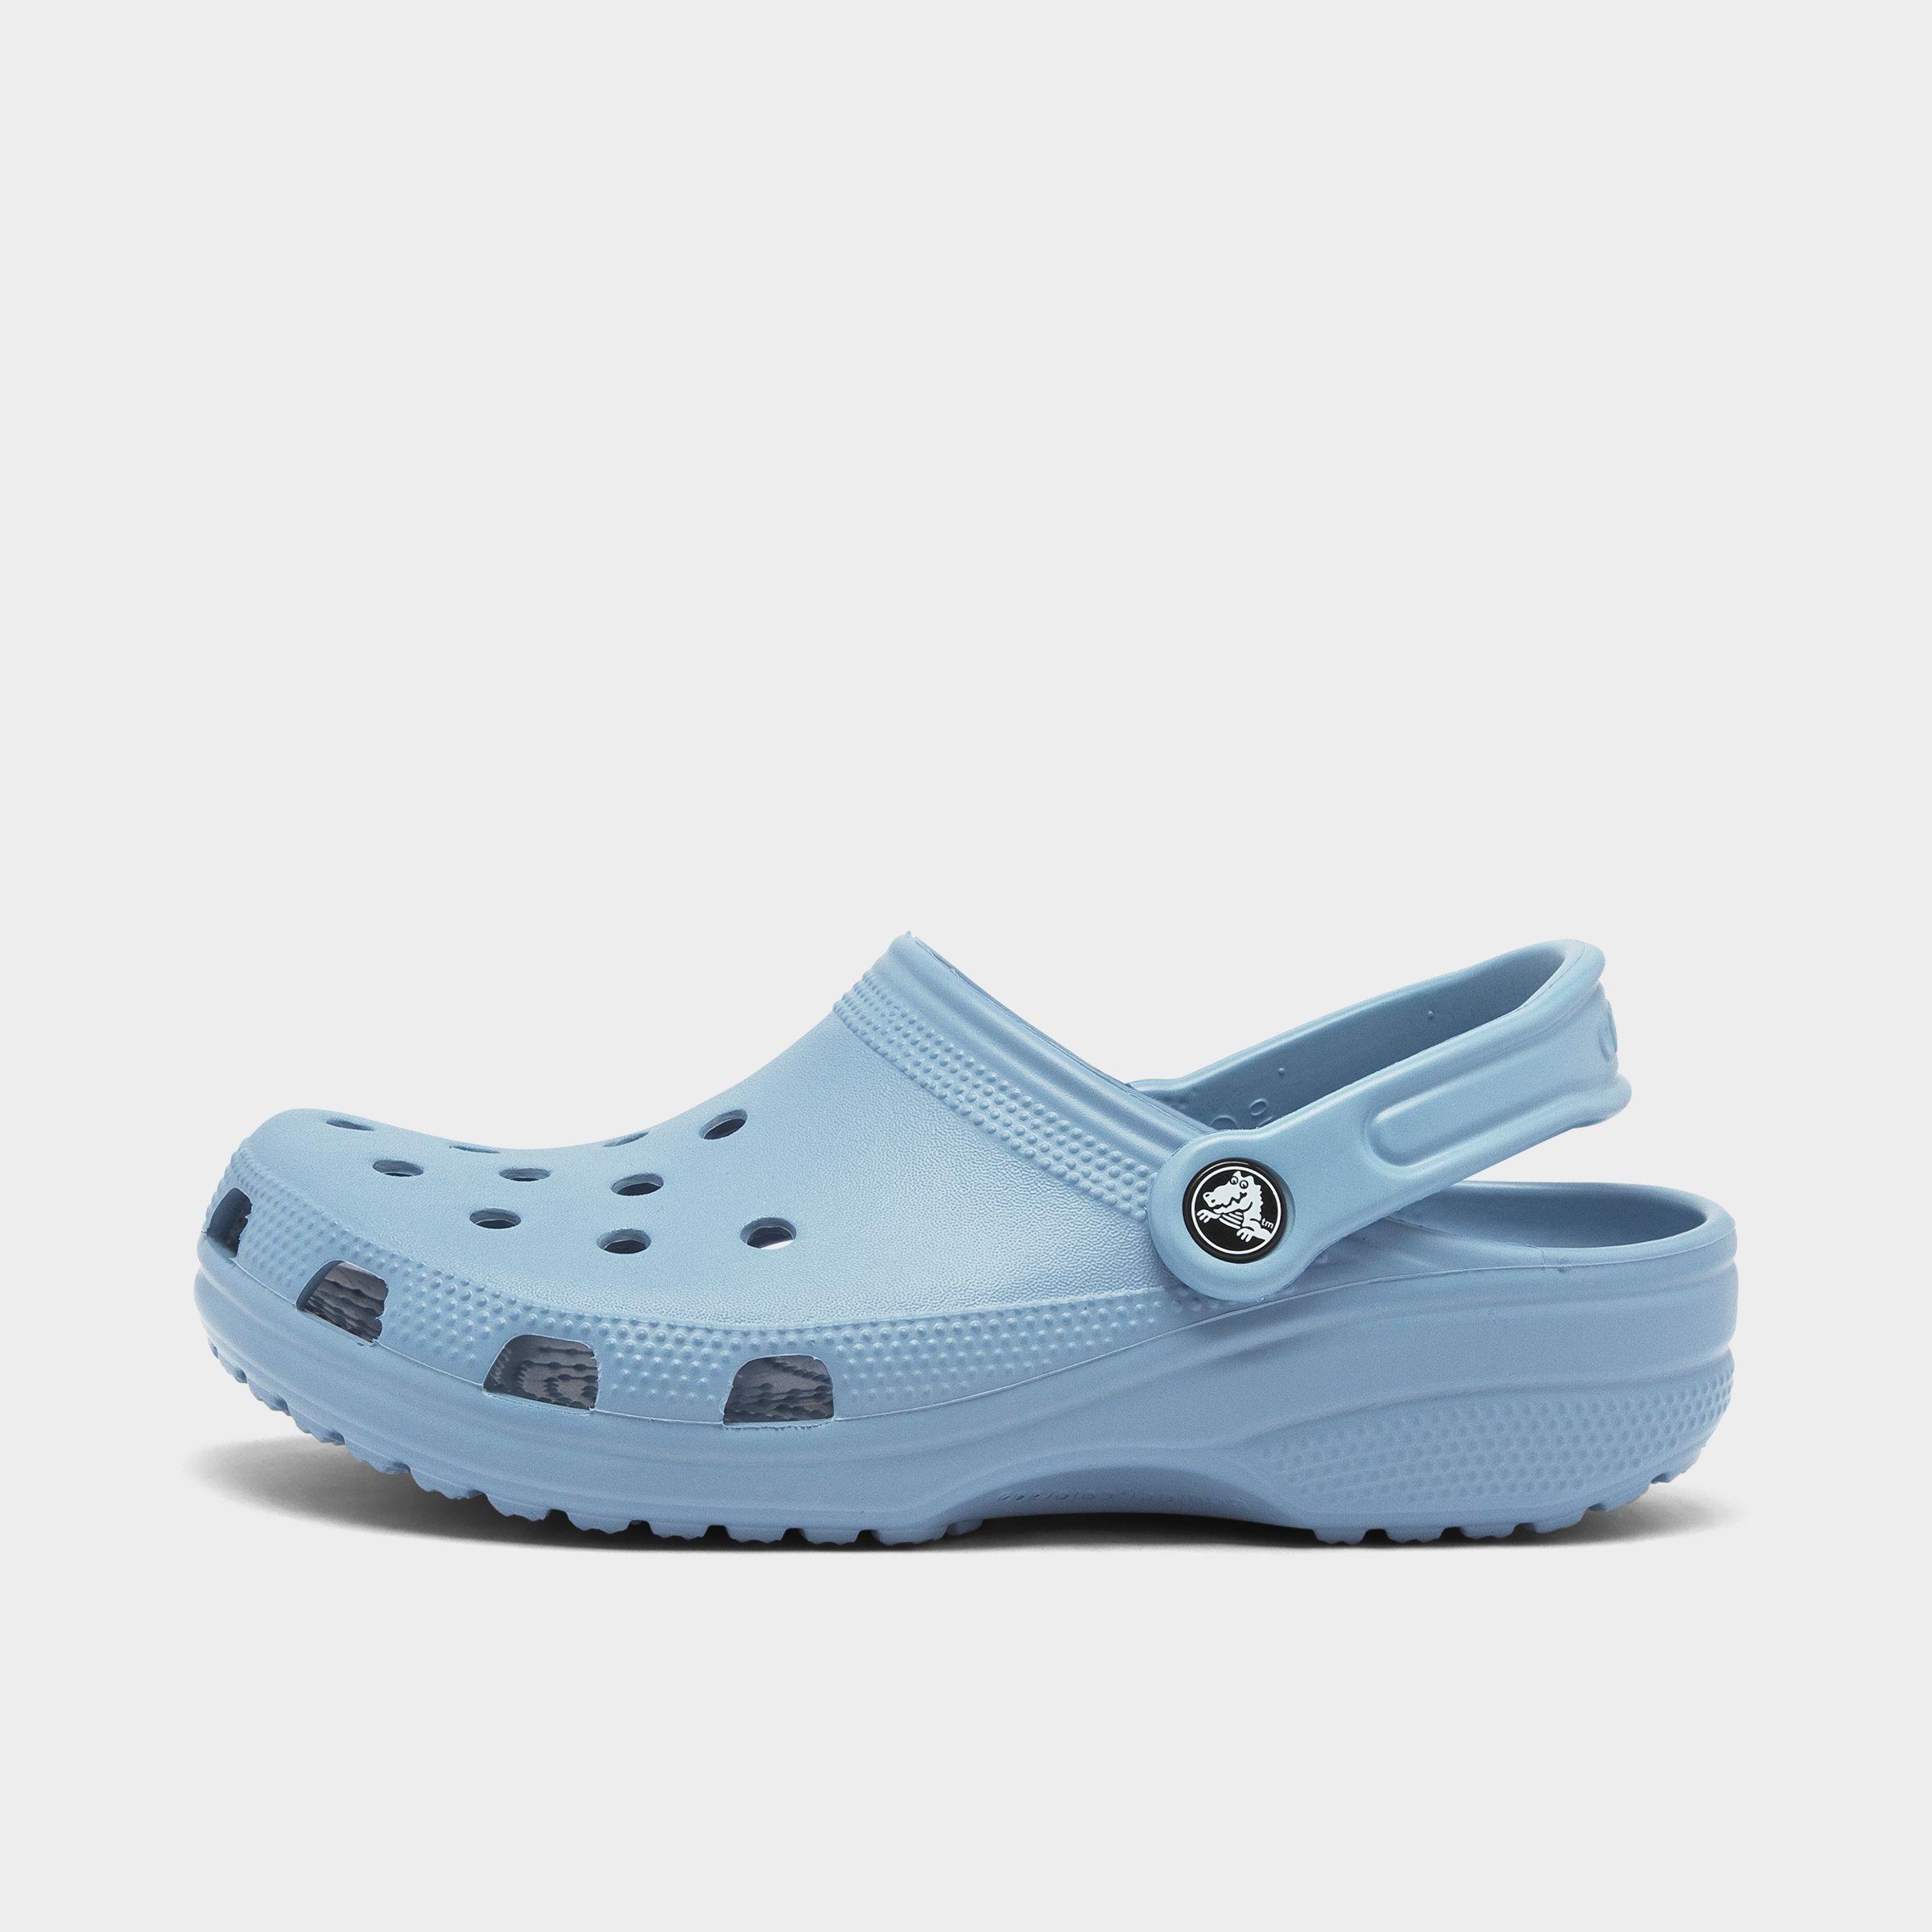 chambray blue crocs